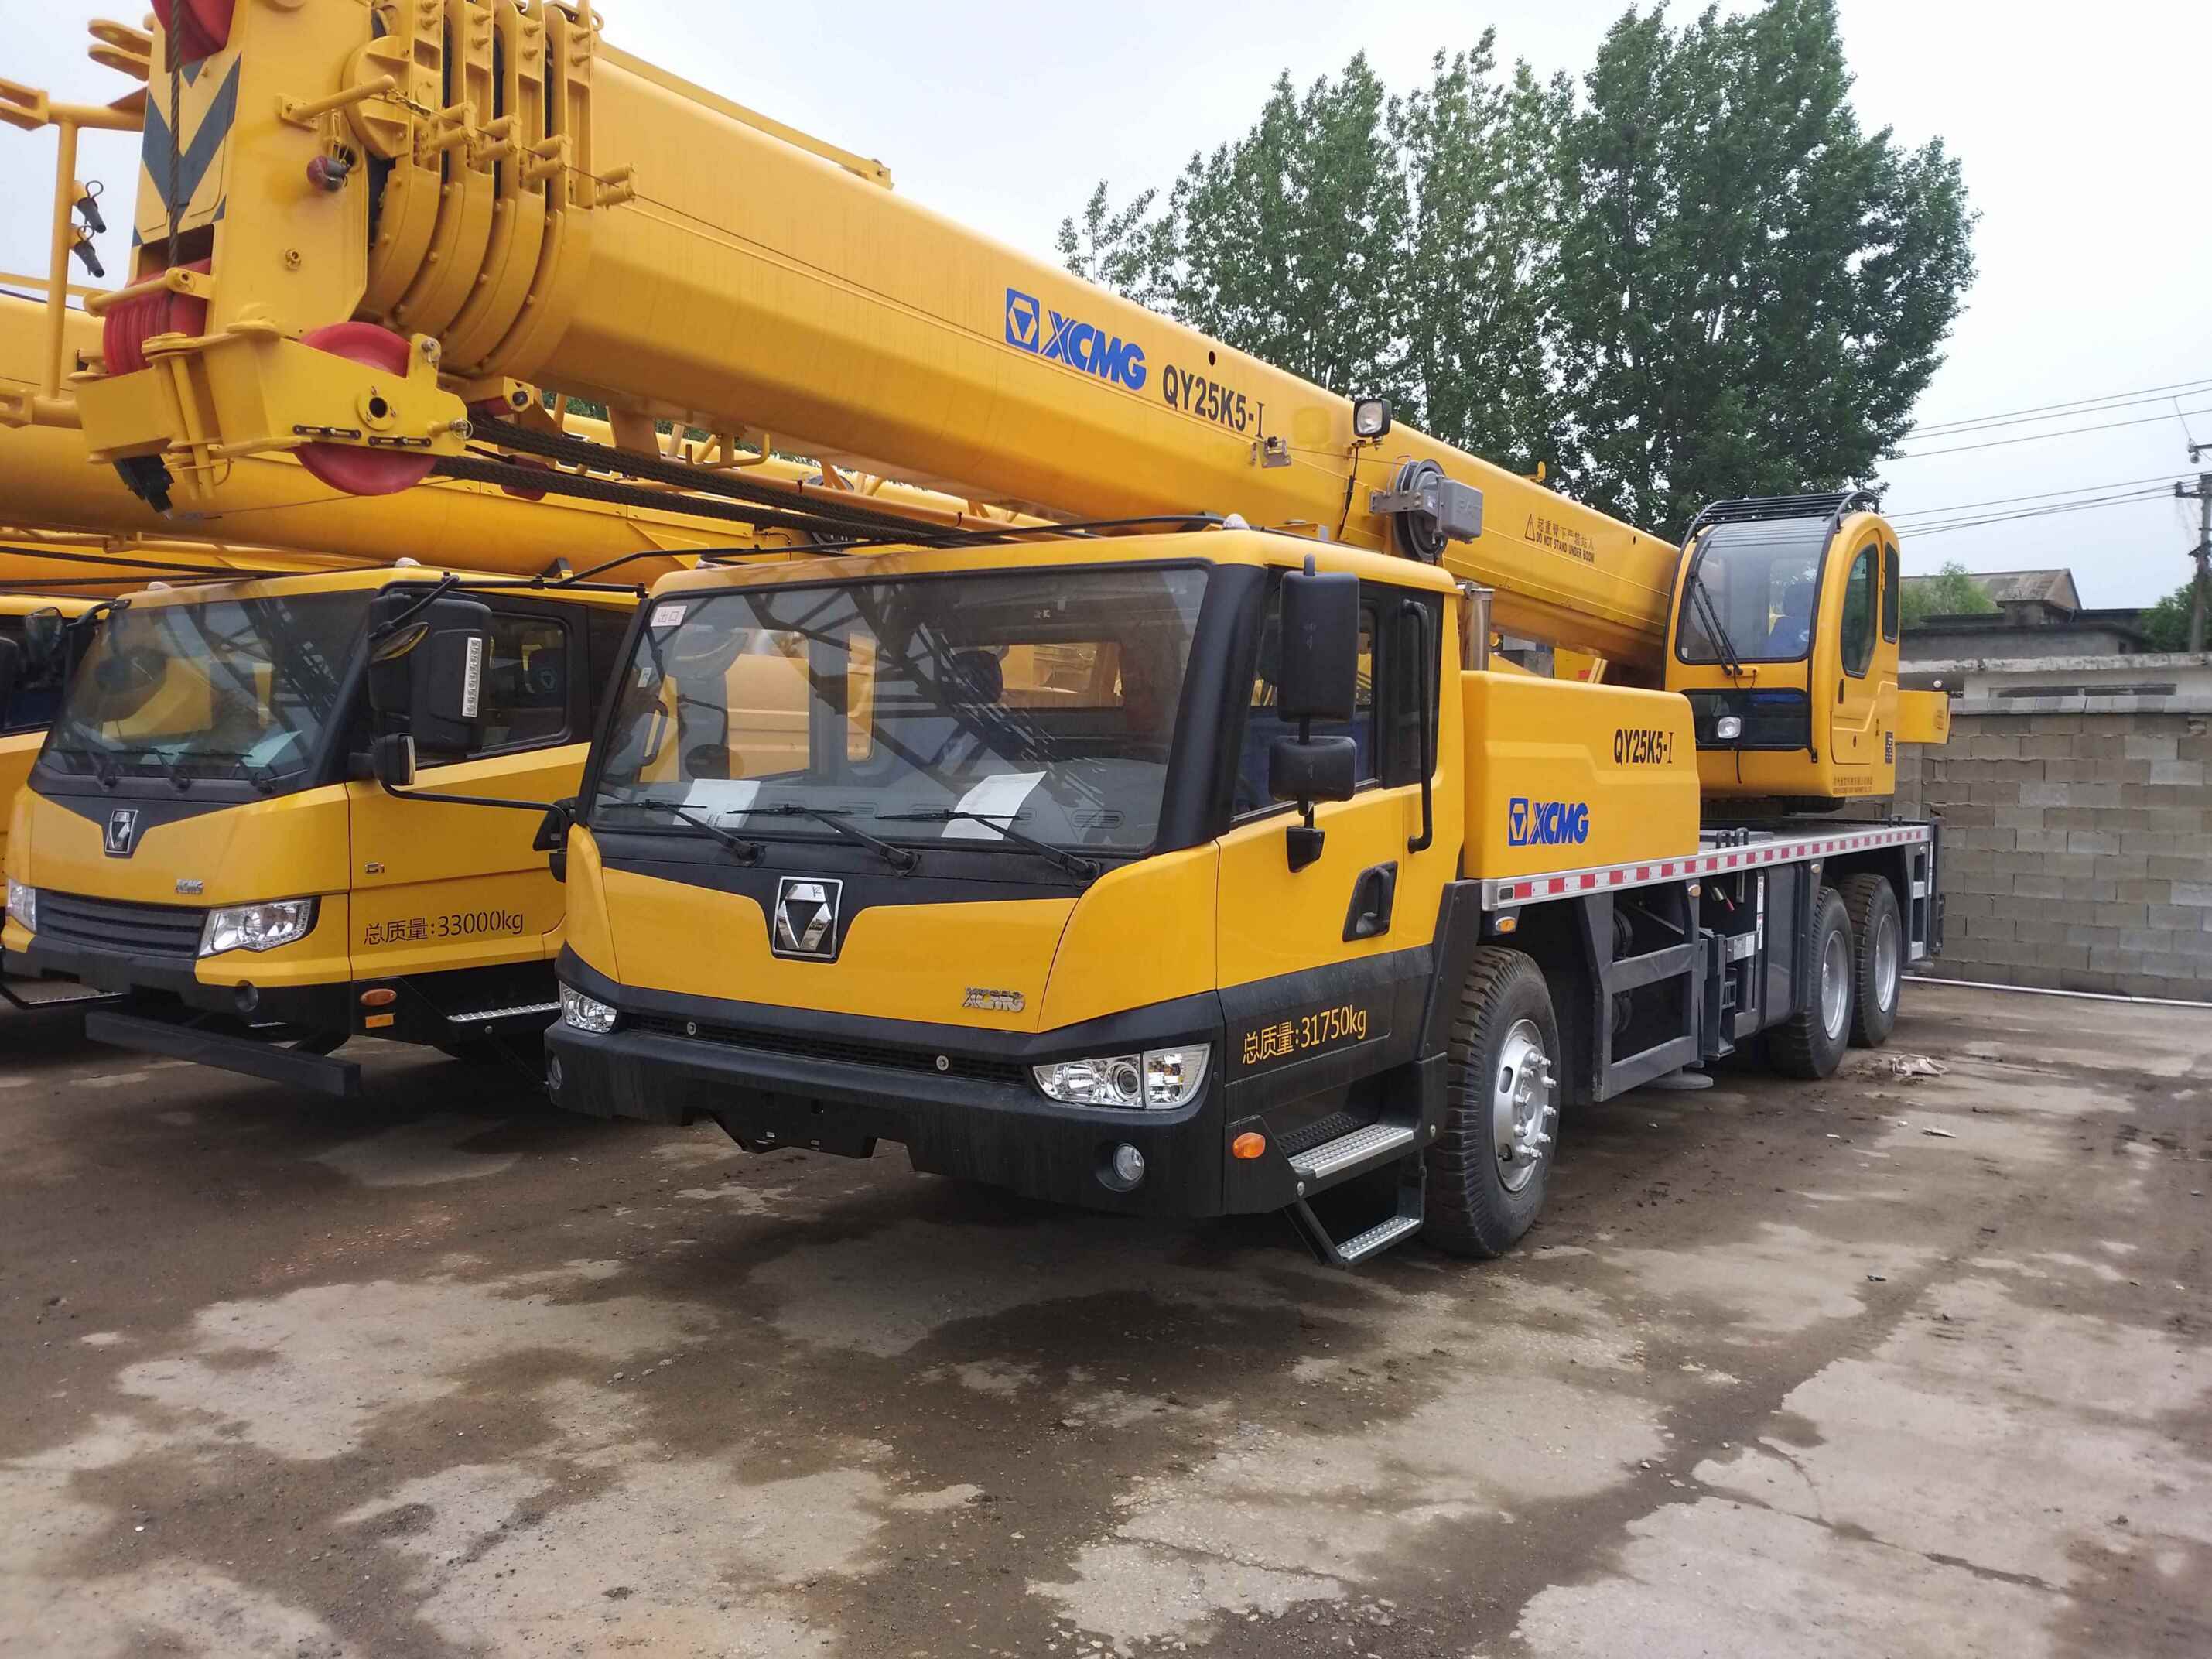 Oriemac Lifting Construction Equipment Qy25K5d 25 Ton New Hoist Mobile Crane Telescopic Boom Truck Crane